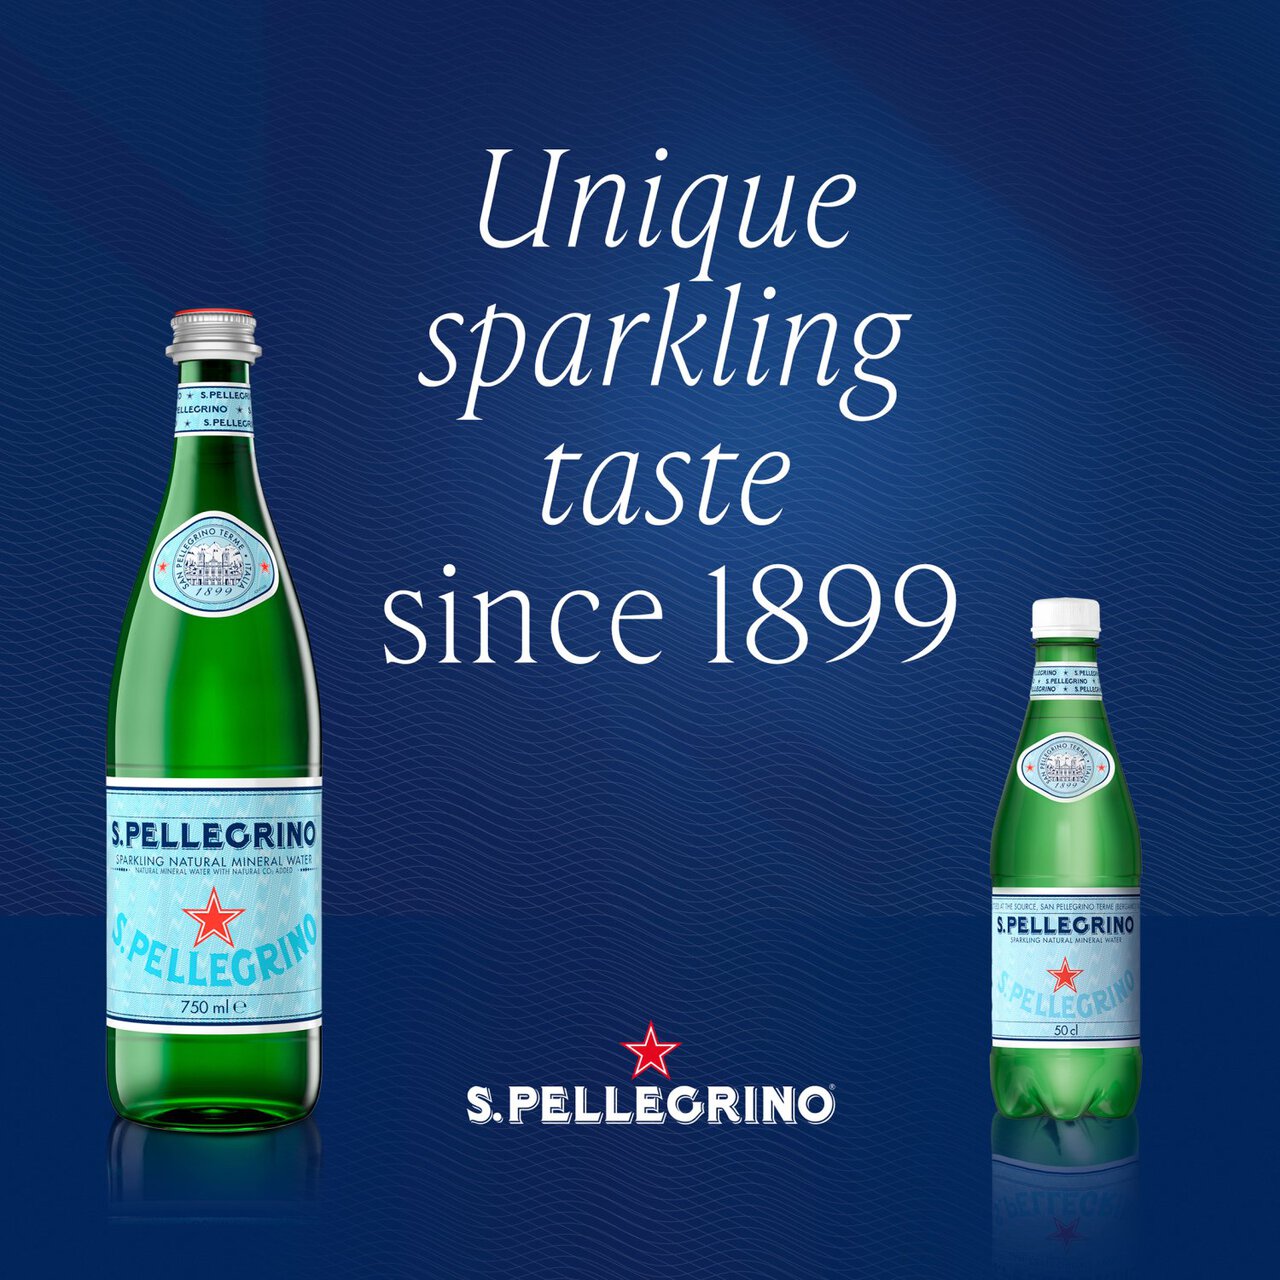 San Pellegrino Sparkling Natural Mineral Water Glass 750ml